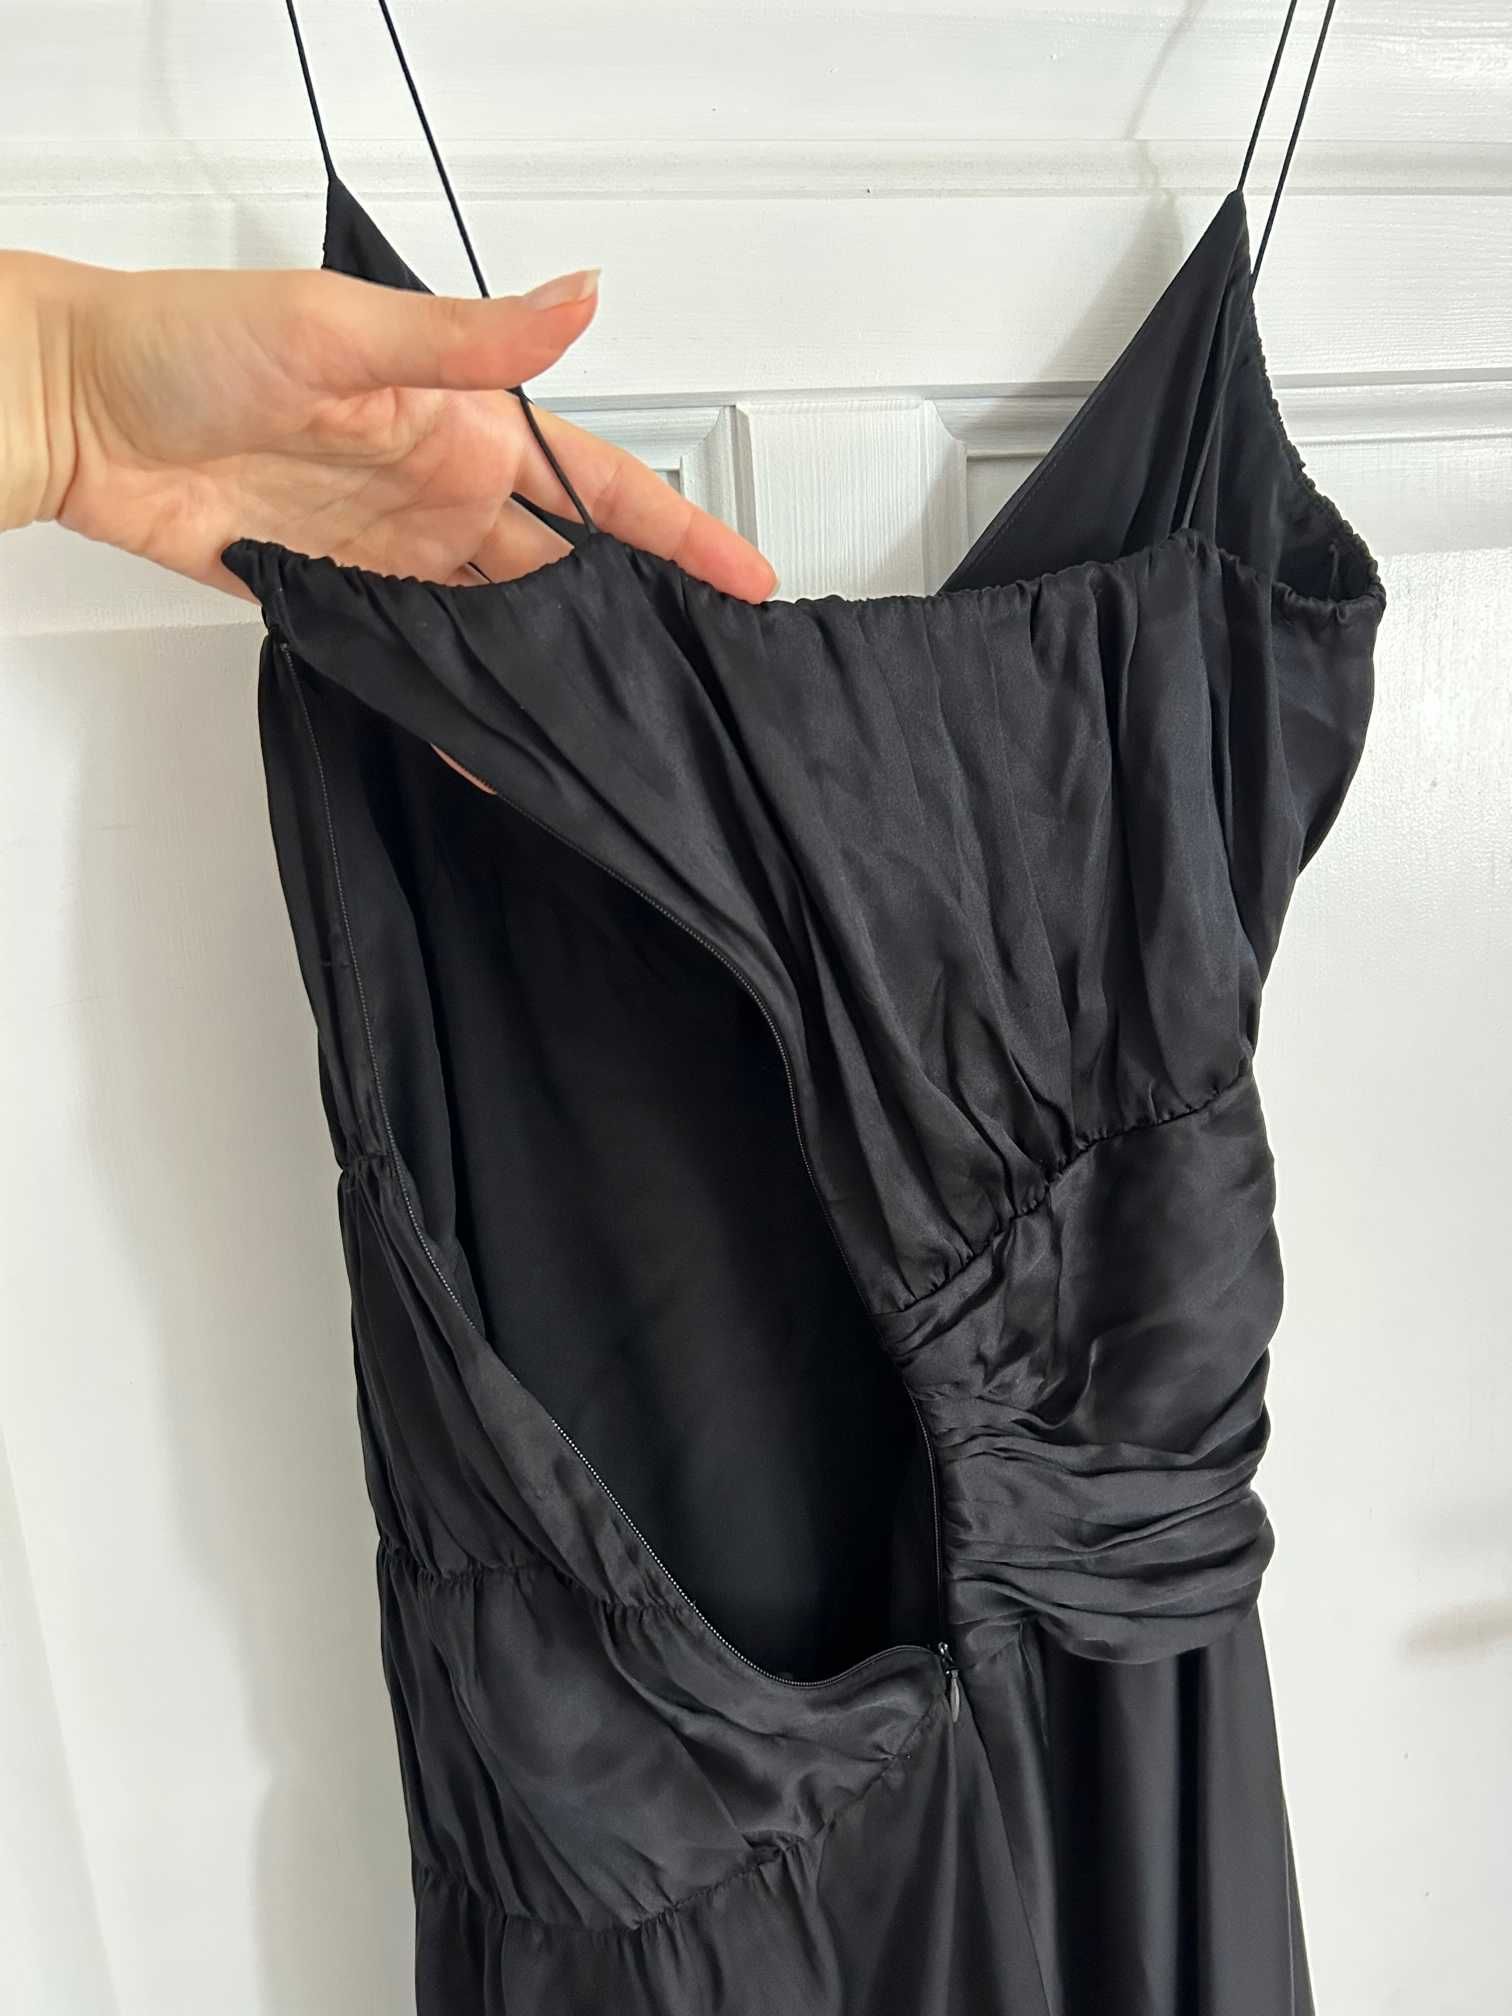 Donna Karan jedwab 100% drapowana maxi slippery dress suknia